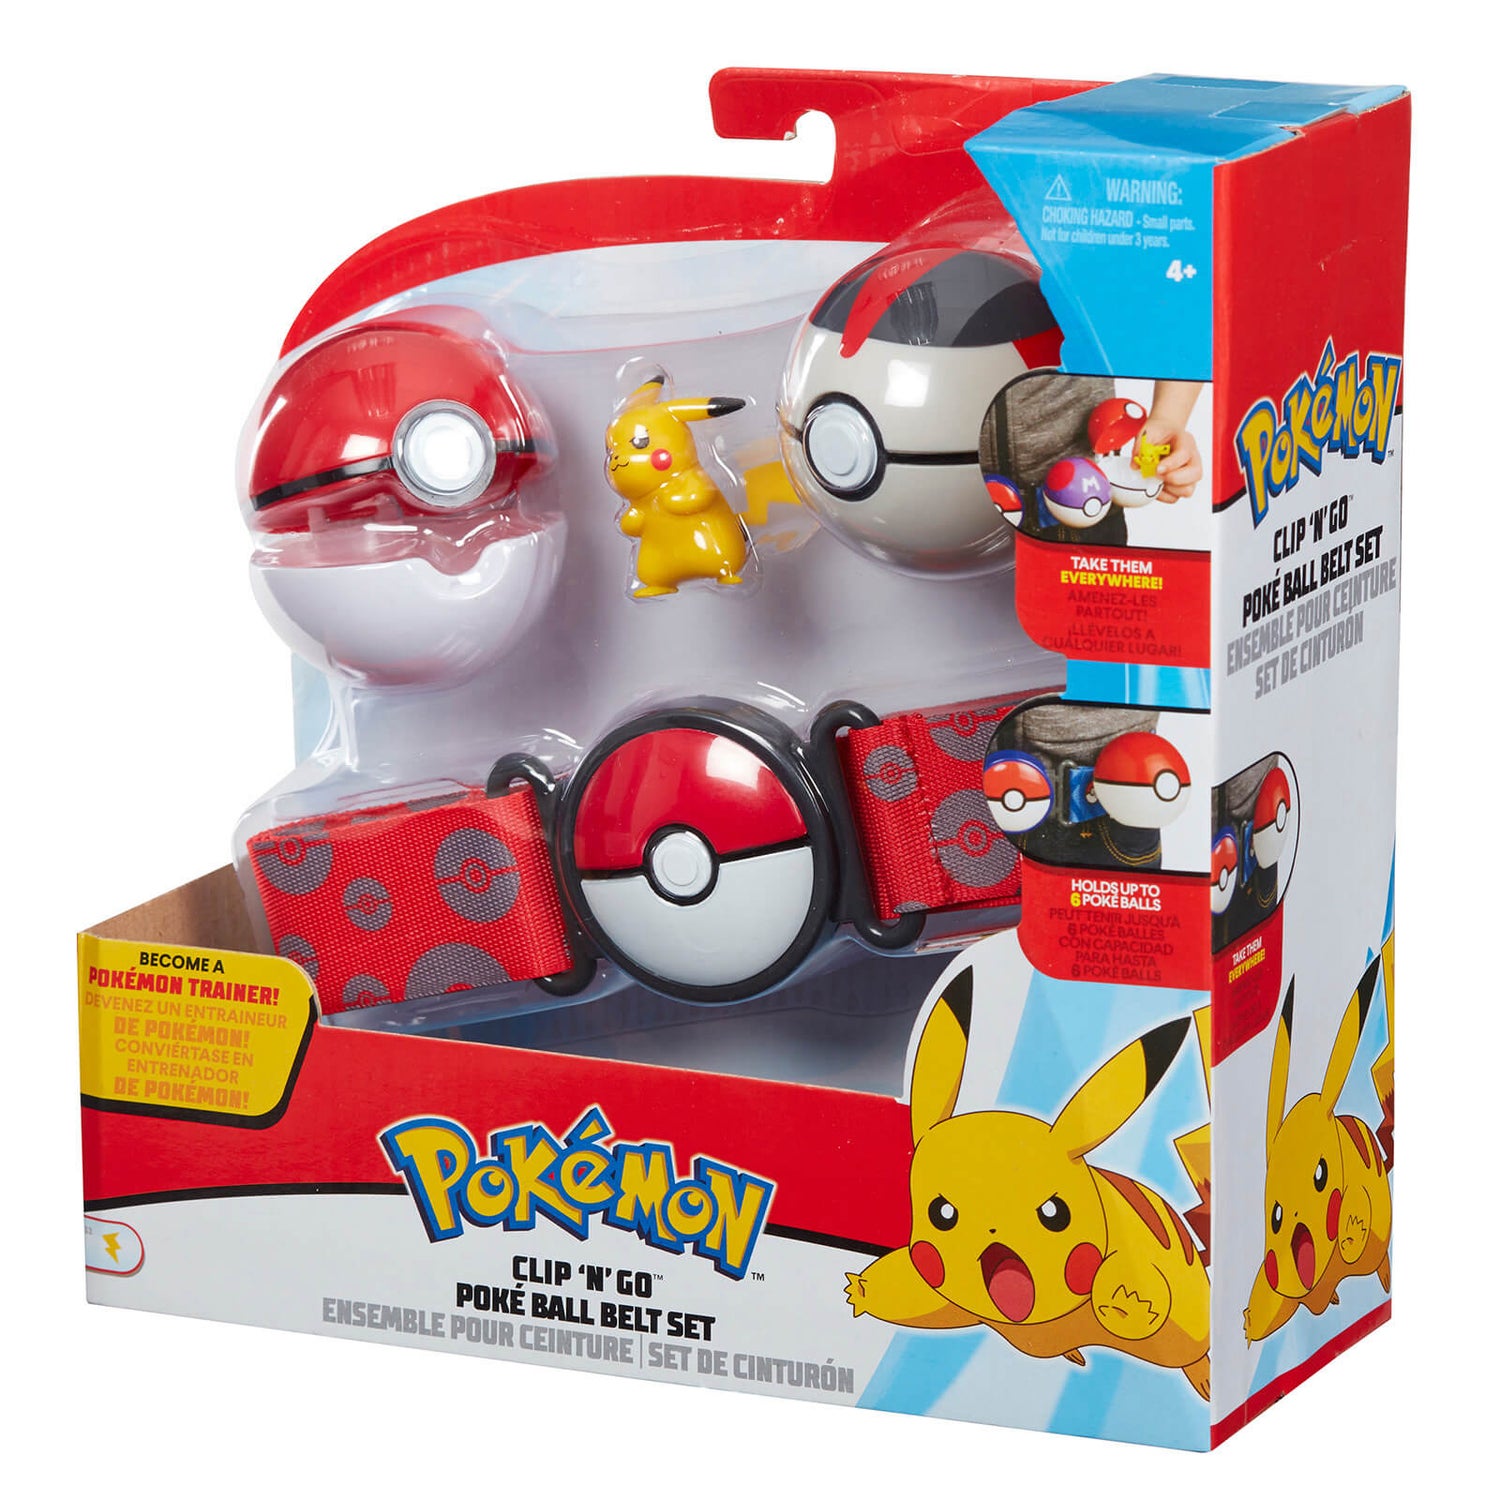 Pokémon set ceinture Clip 'N' Go Pikachu Poke Ball Merchandise